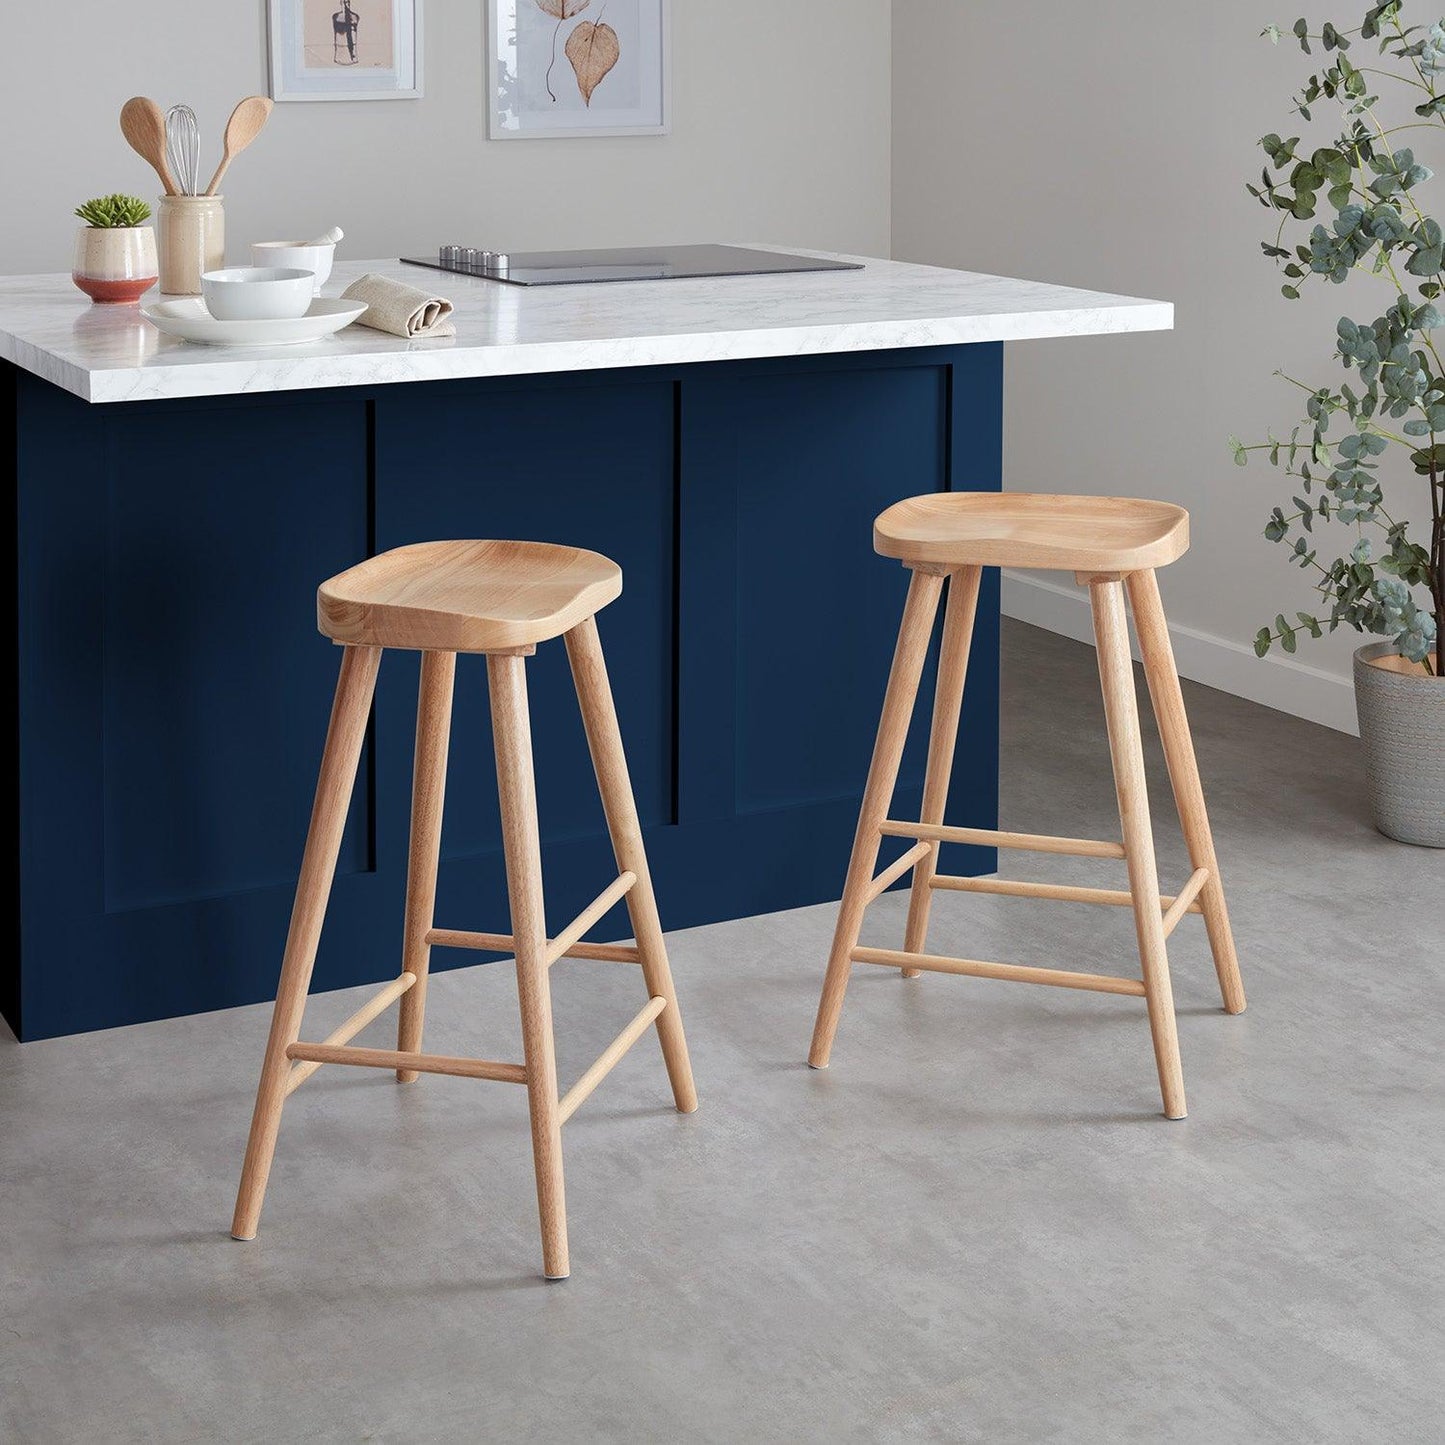 Silvester bar stool - natural wood finish - Laura James